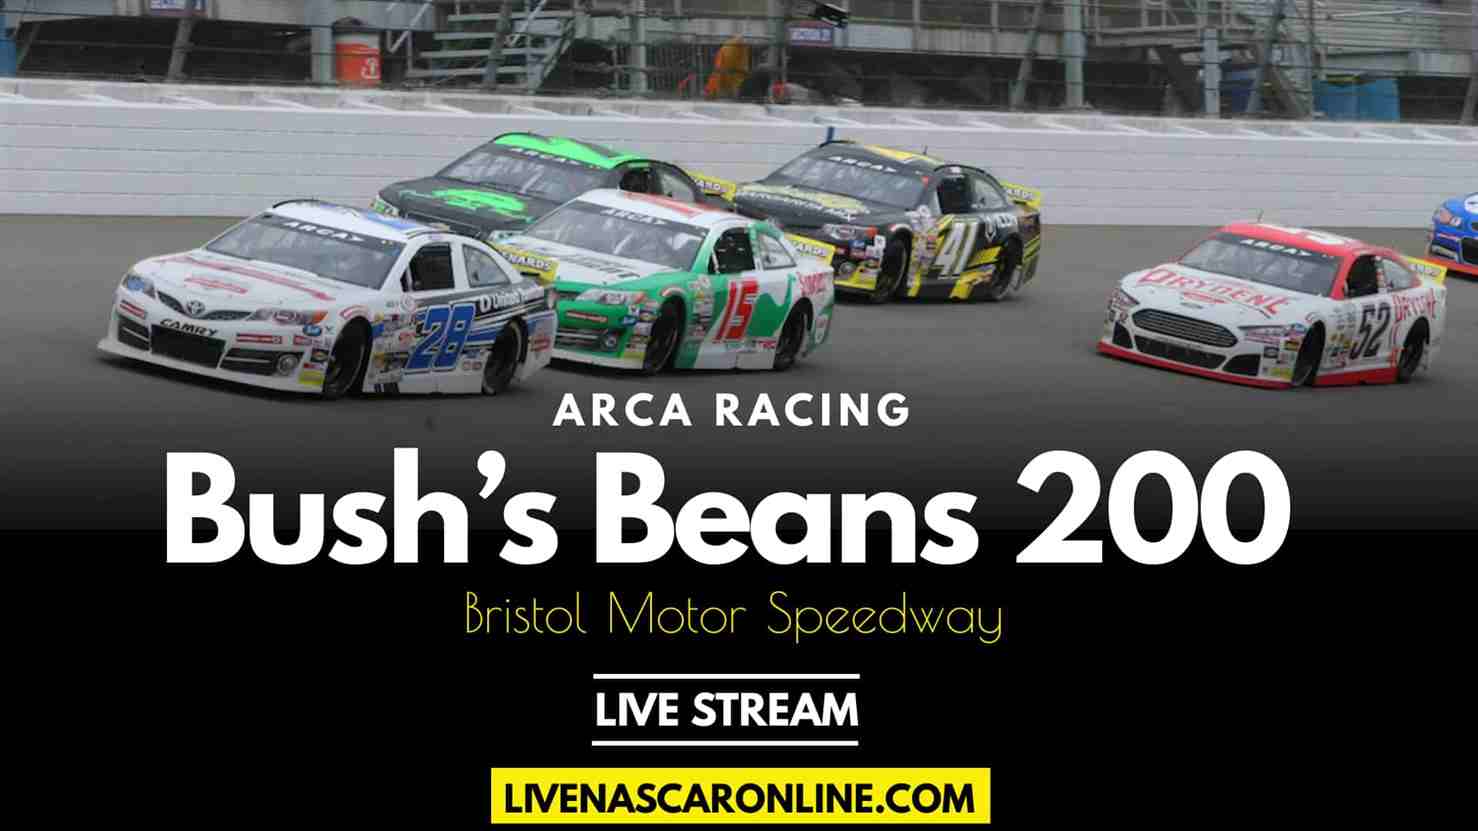 Bushs Beans 200 ARCA Racing Live Stream